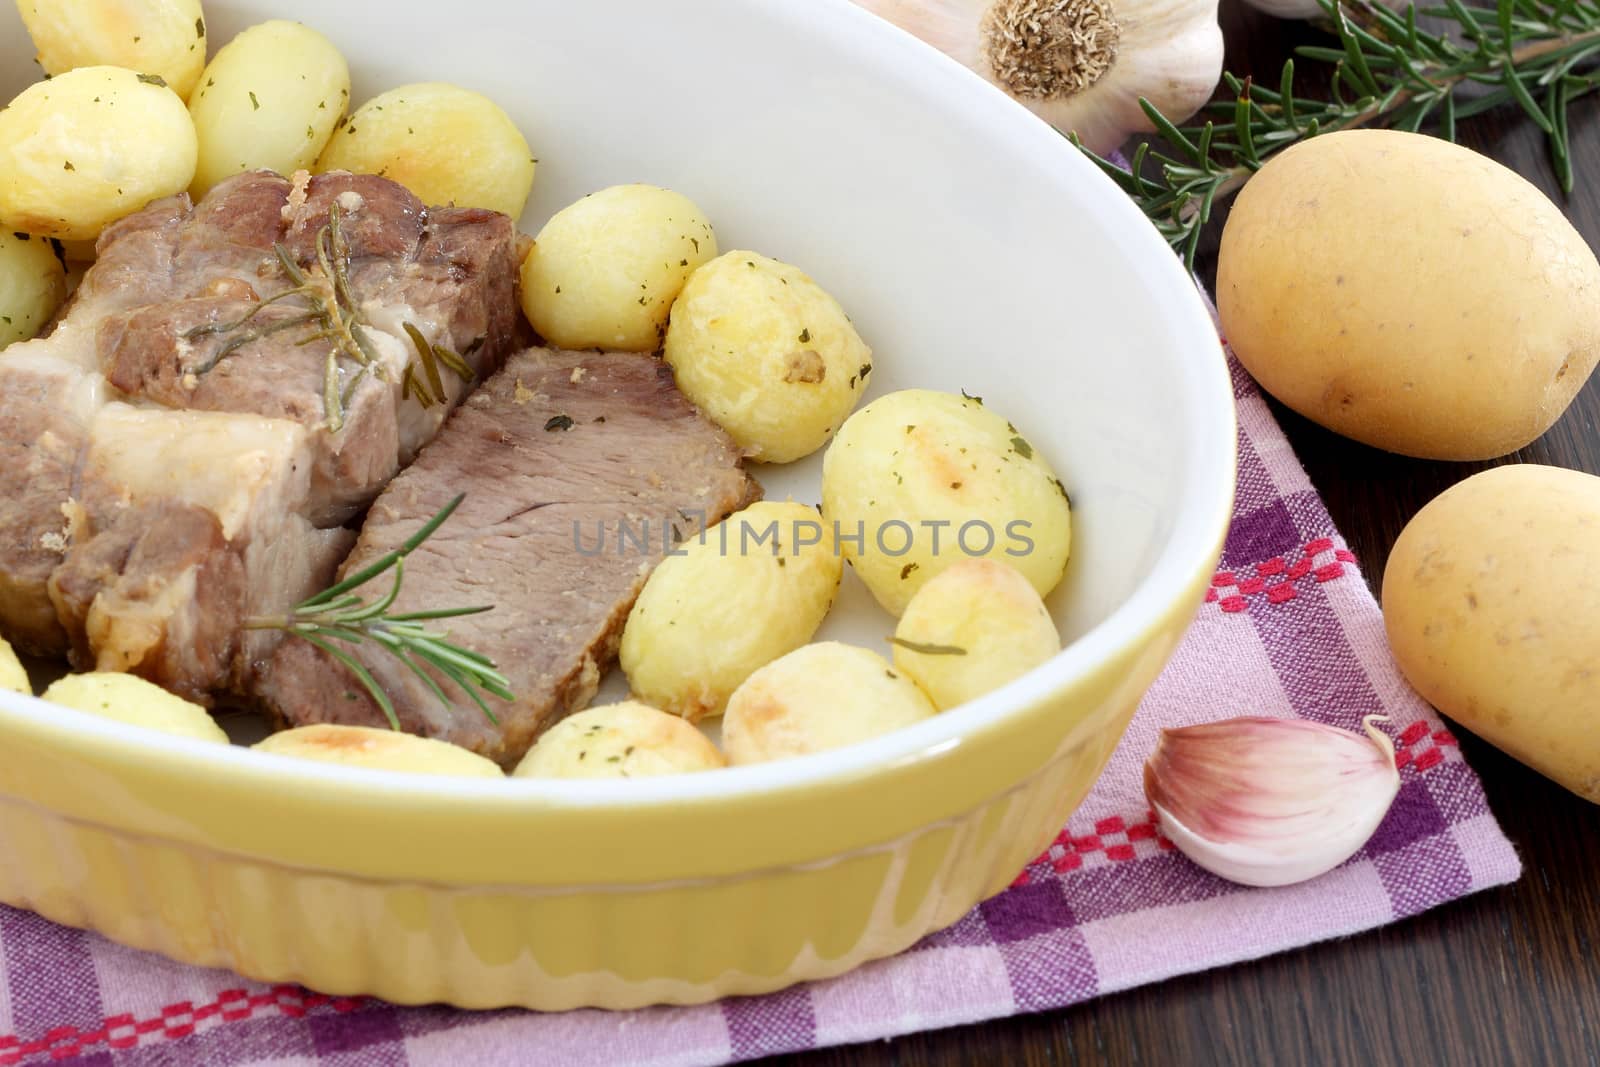 Pork roast with roasted potatoes